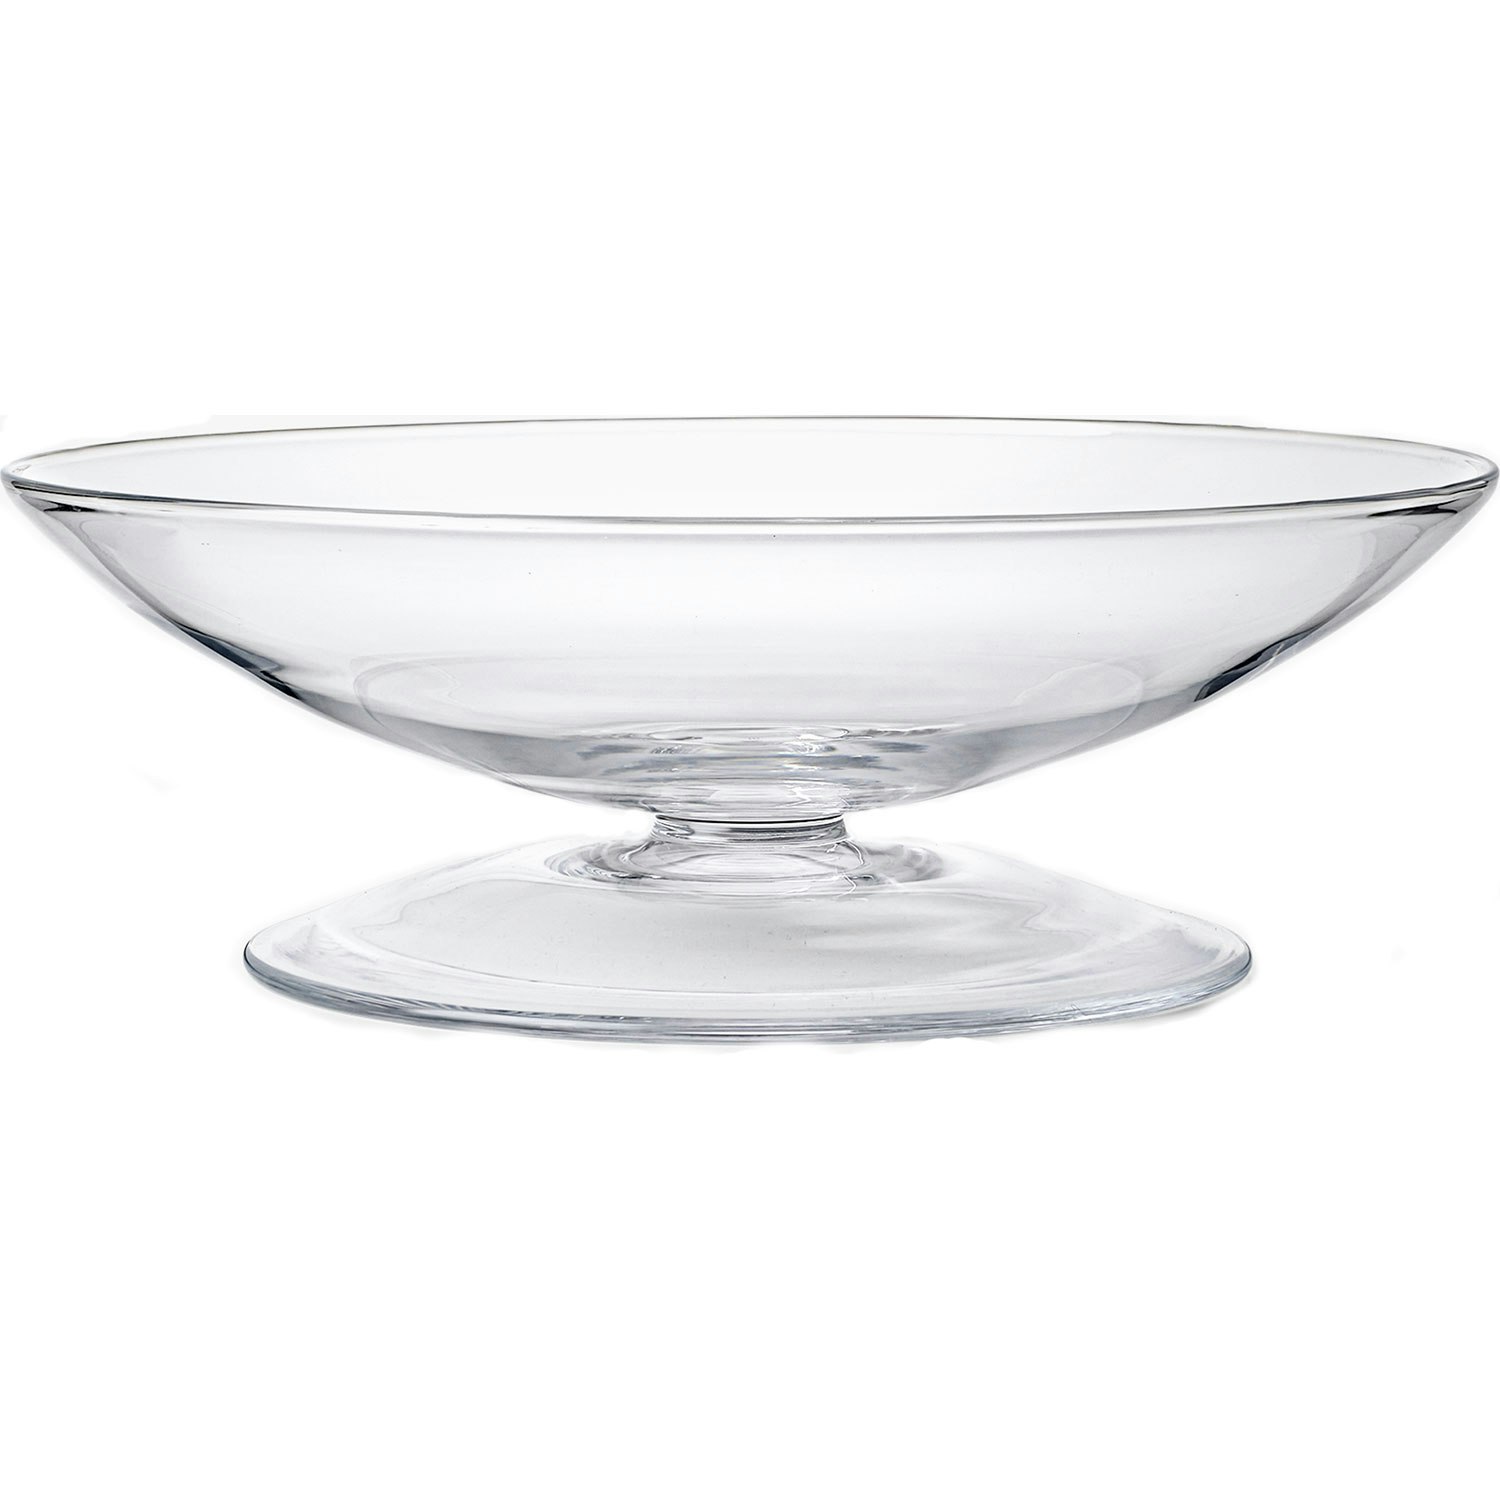 https://royaldesign.com/image/2/louise-roe-bubble-glass-grape-tray-0